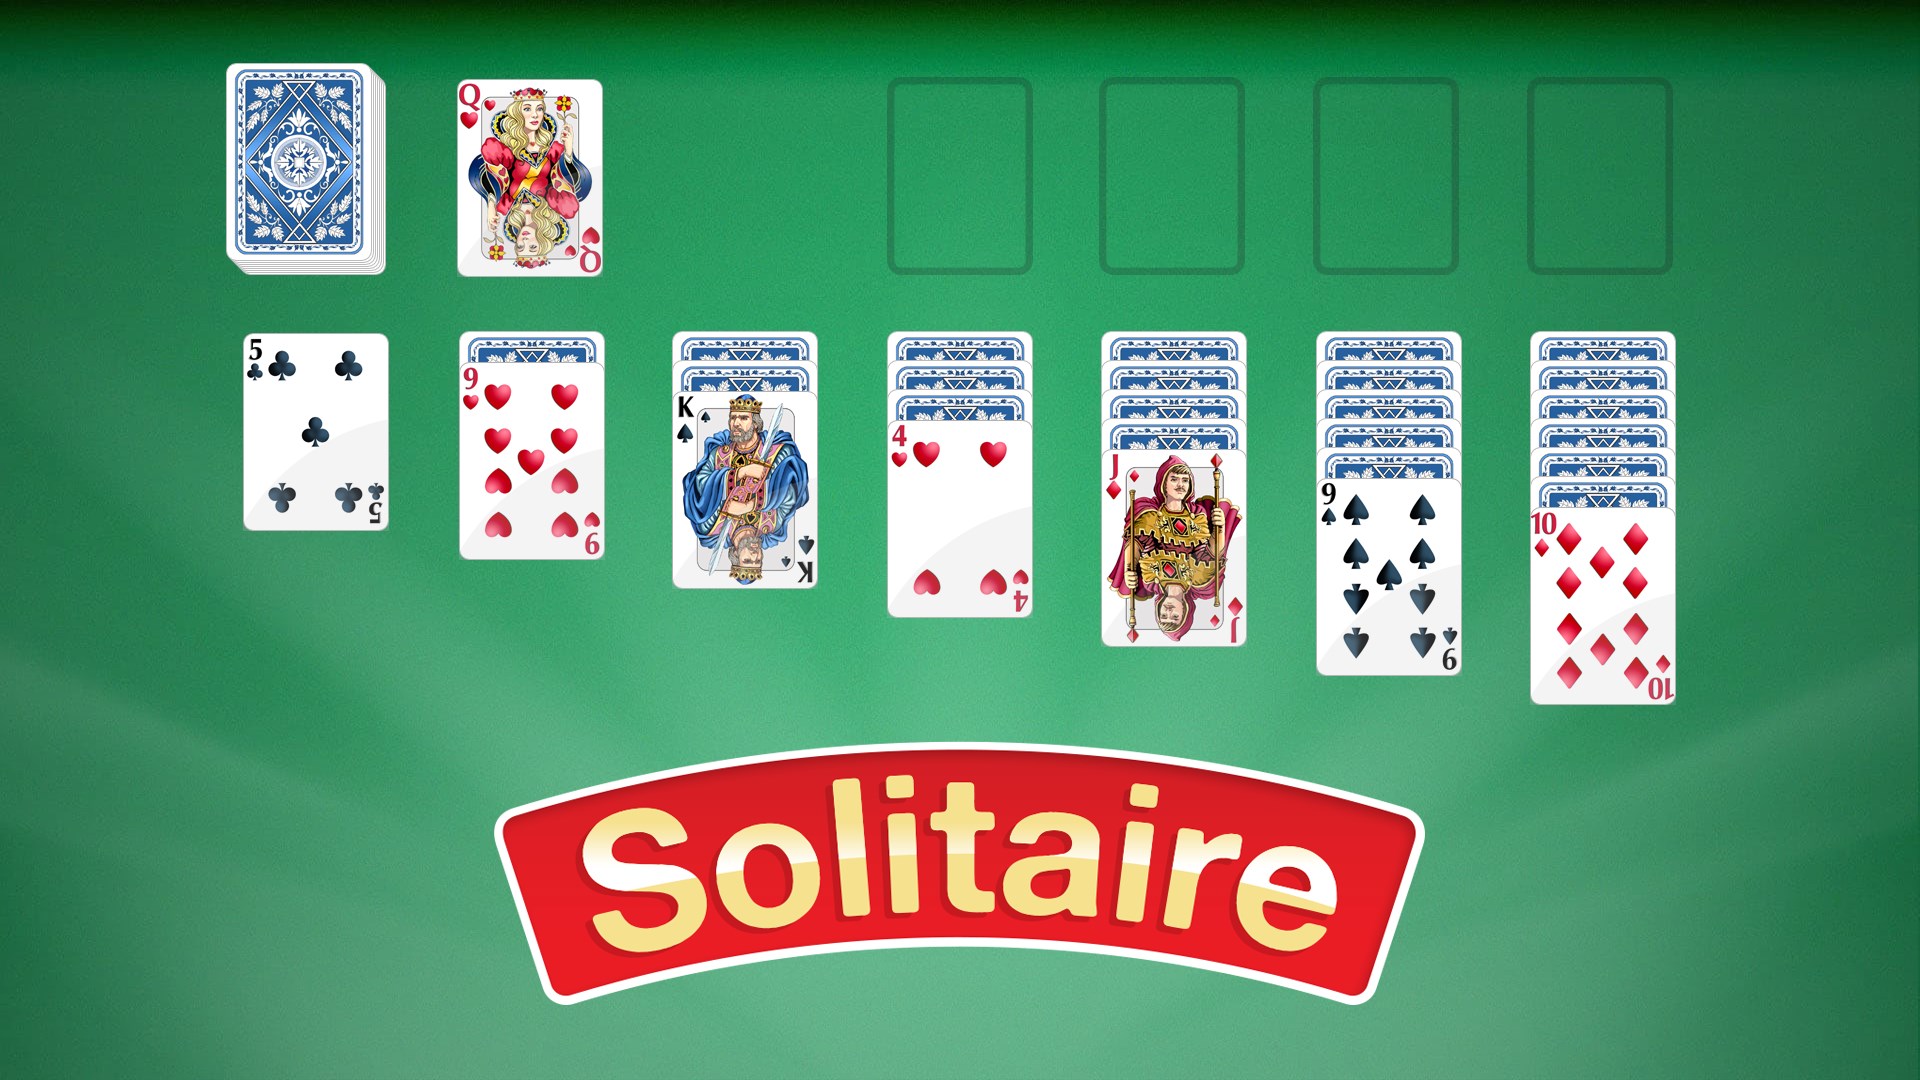 ♤ Klondike Solitaire 247 ➜ free Solitaire online! 🥇